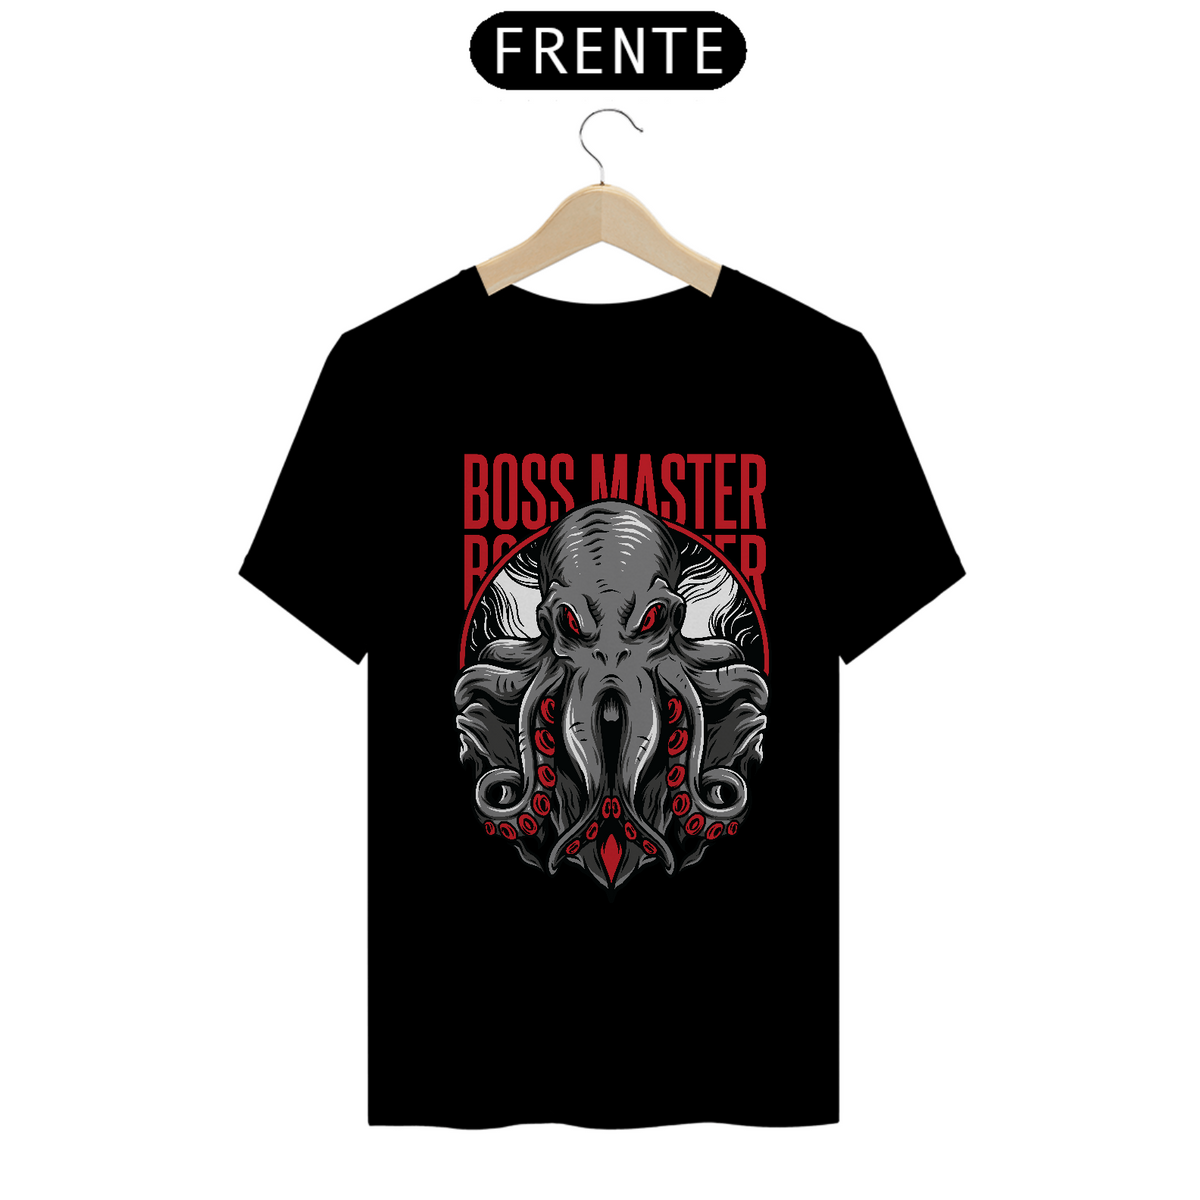 Nome do produto: Camiseta Boss Master